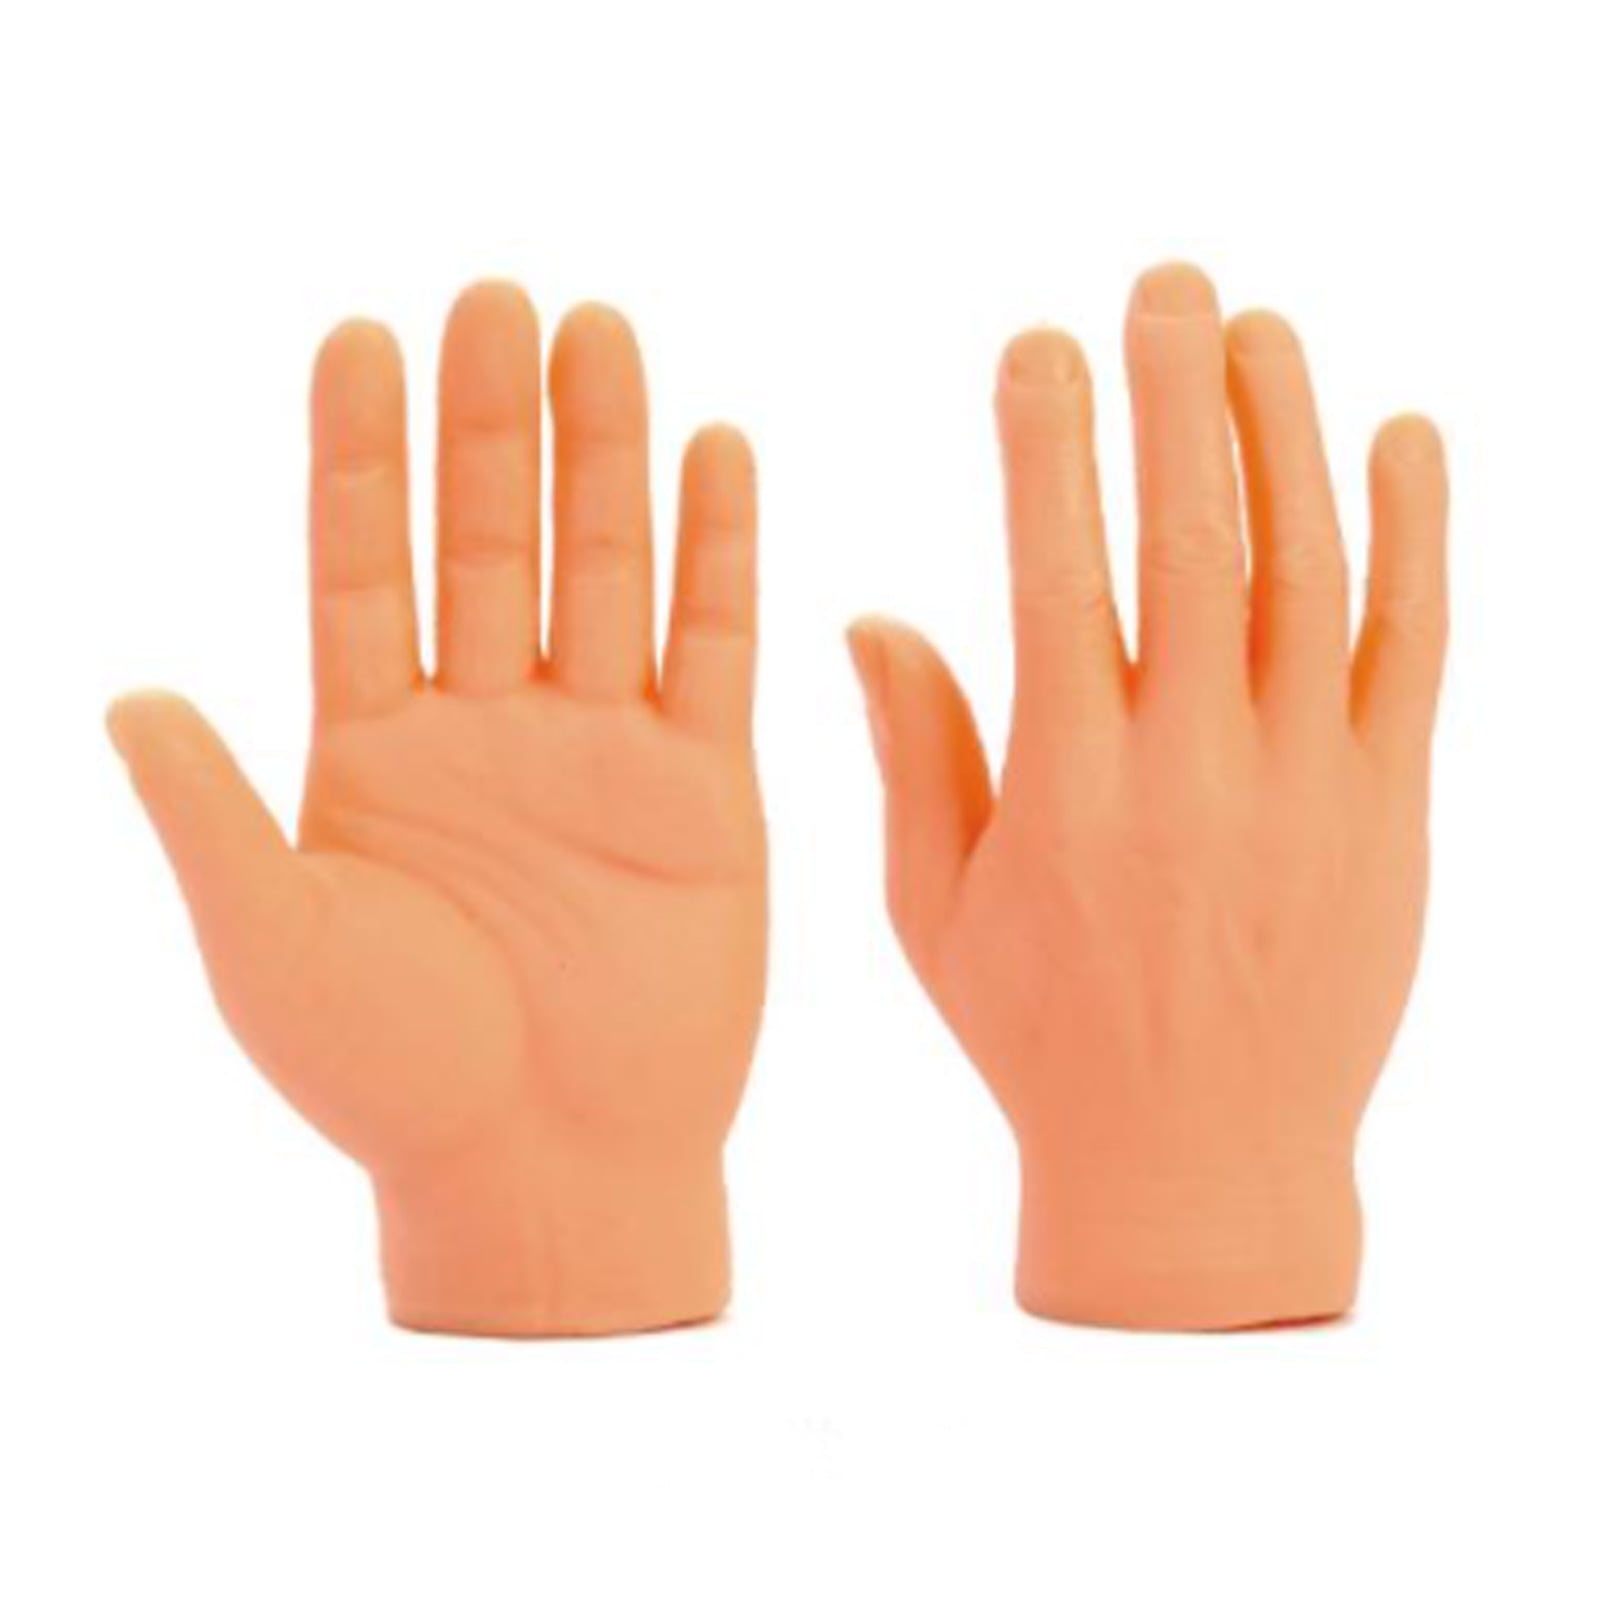 Details about   2Pcs Christmas Mini Finger Hands Tiny Left Right Hand Costume B6V5 For Gam V1L2 